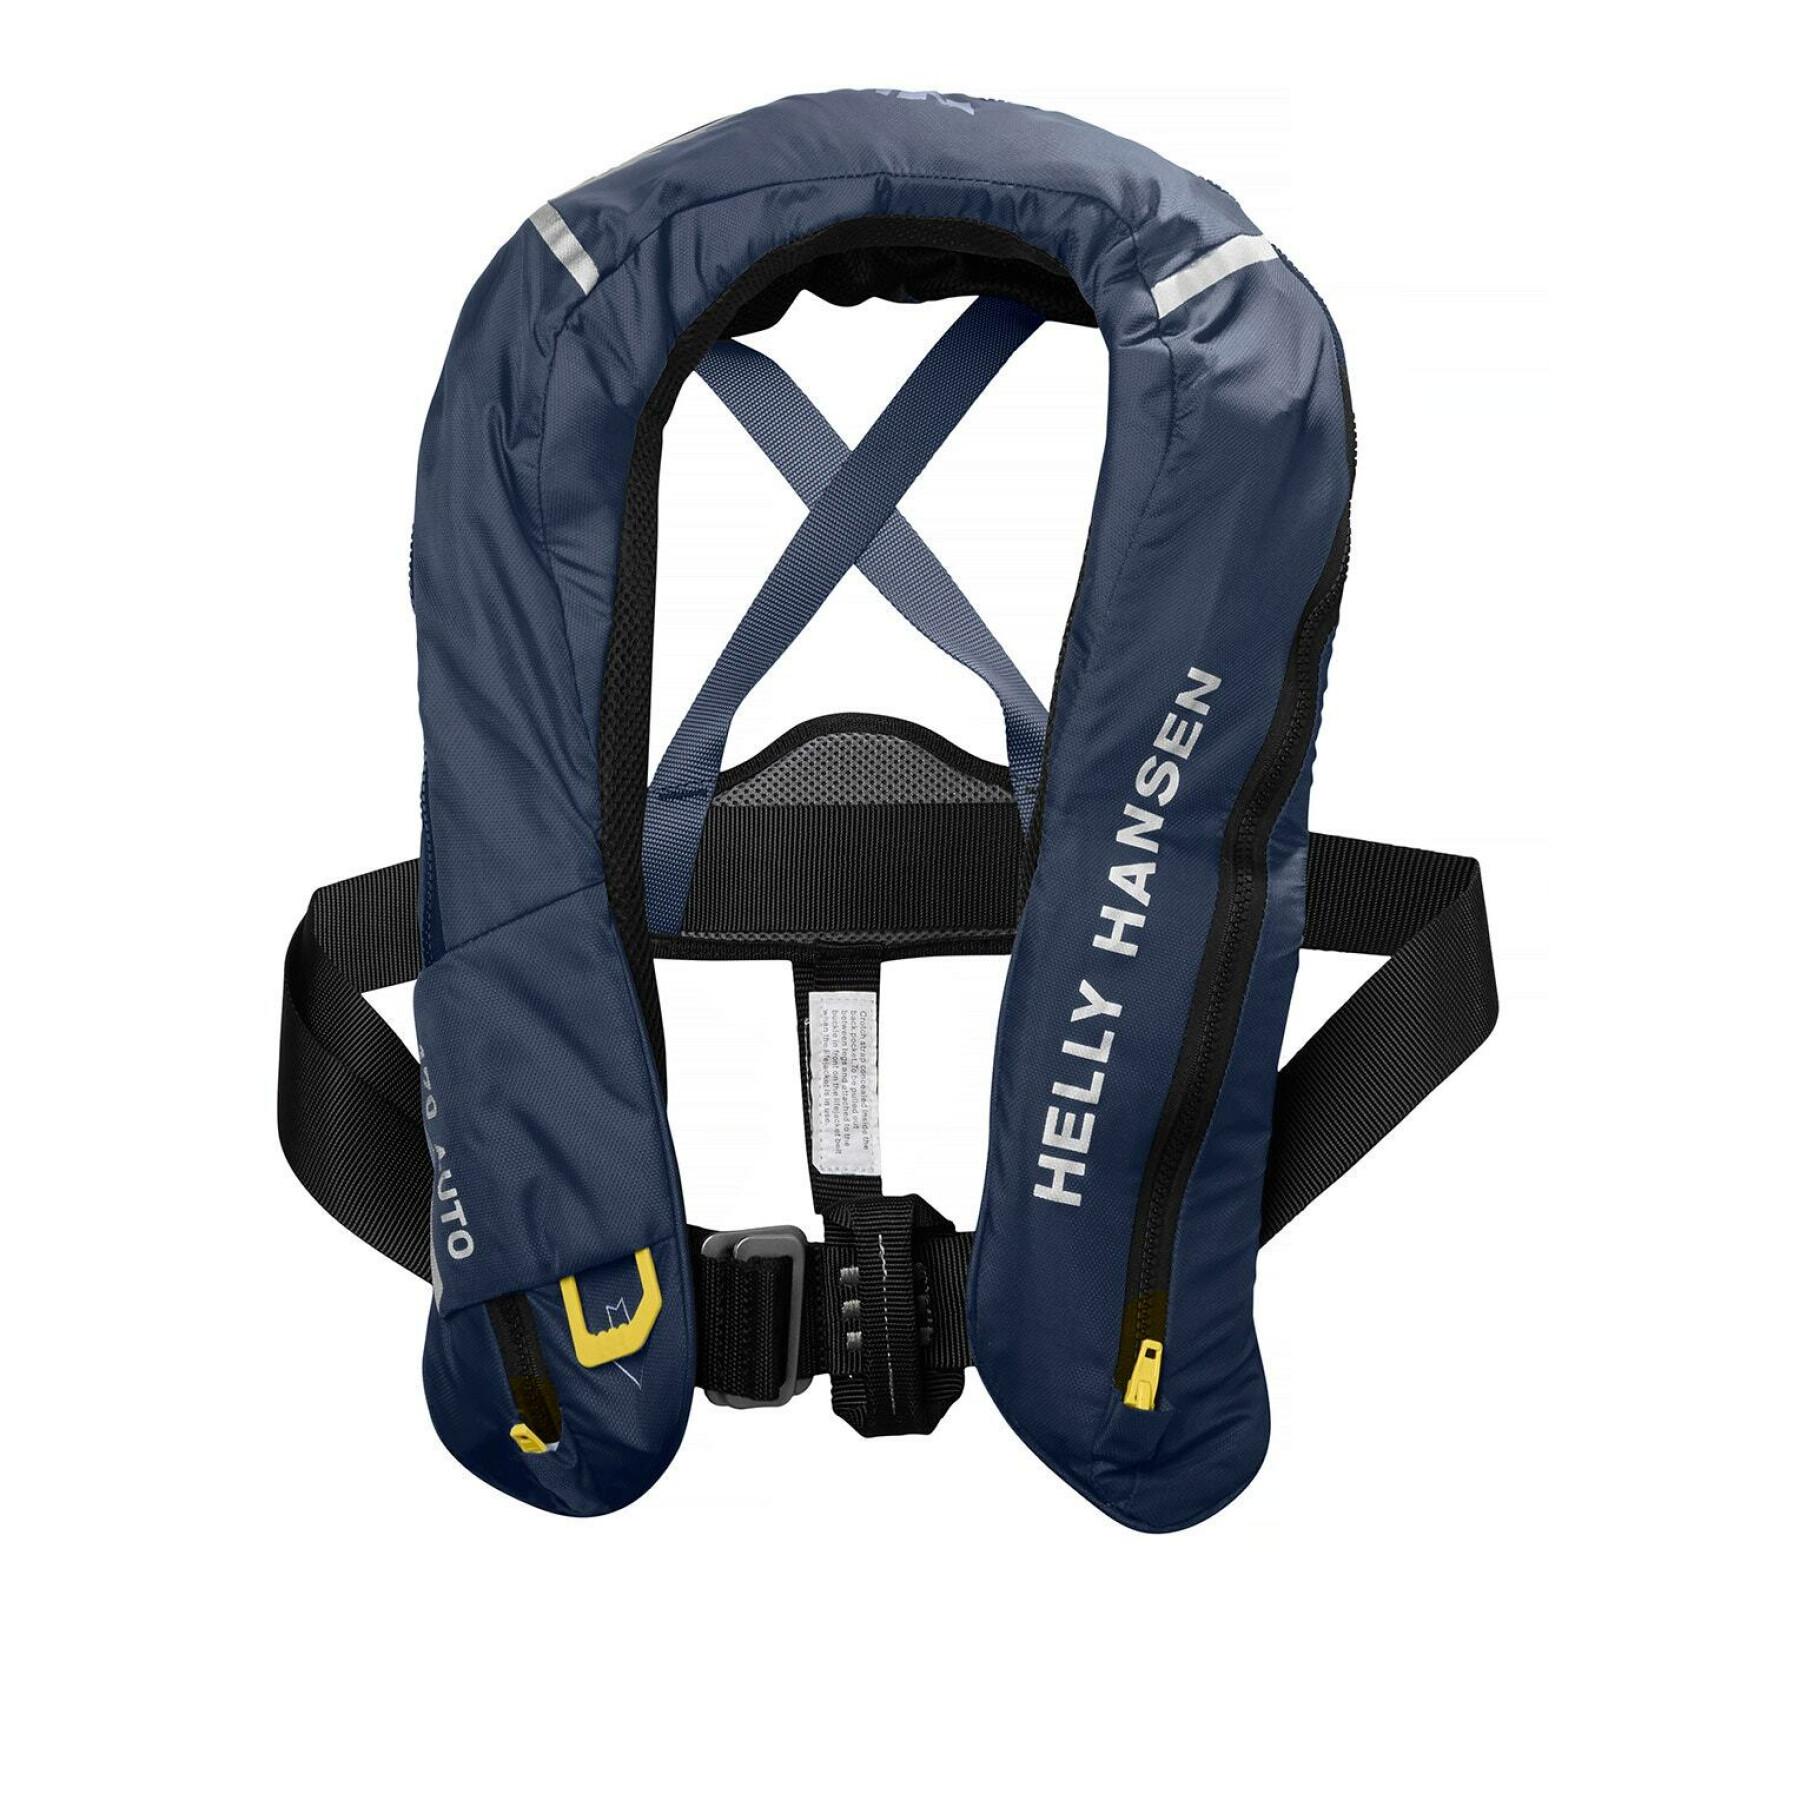 Inflatable lifejacket Helly Hansen Sailsafe Inshore